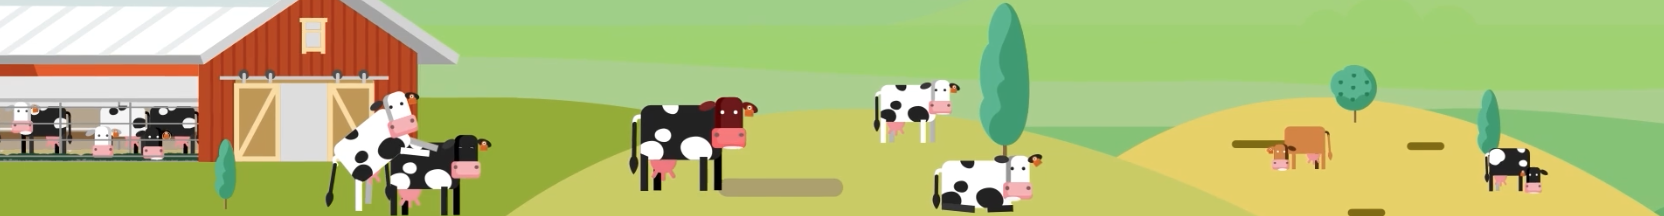 CowManager farm animation